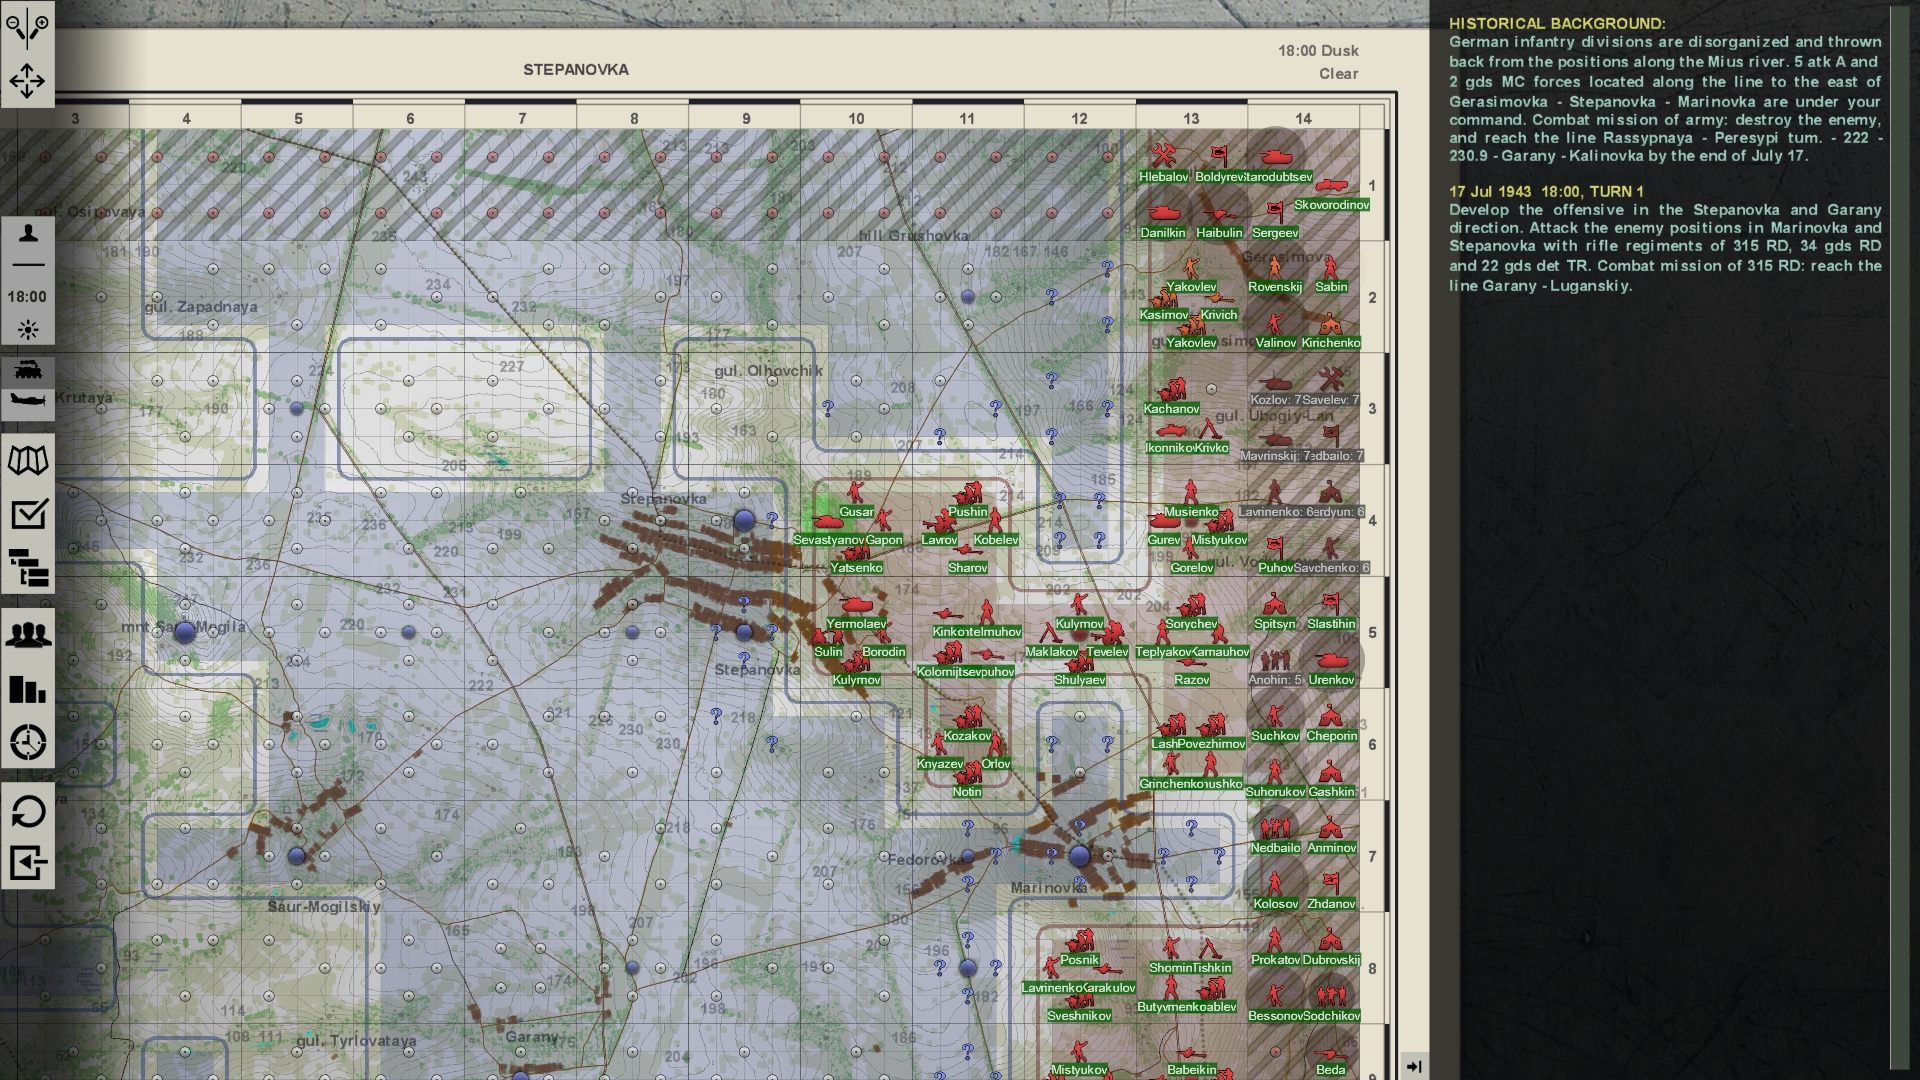 Graviteam Tactics: Mius-Front screenshot